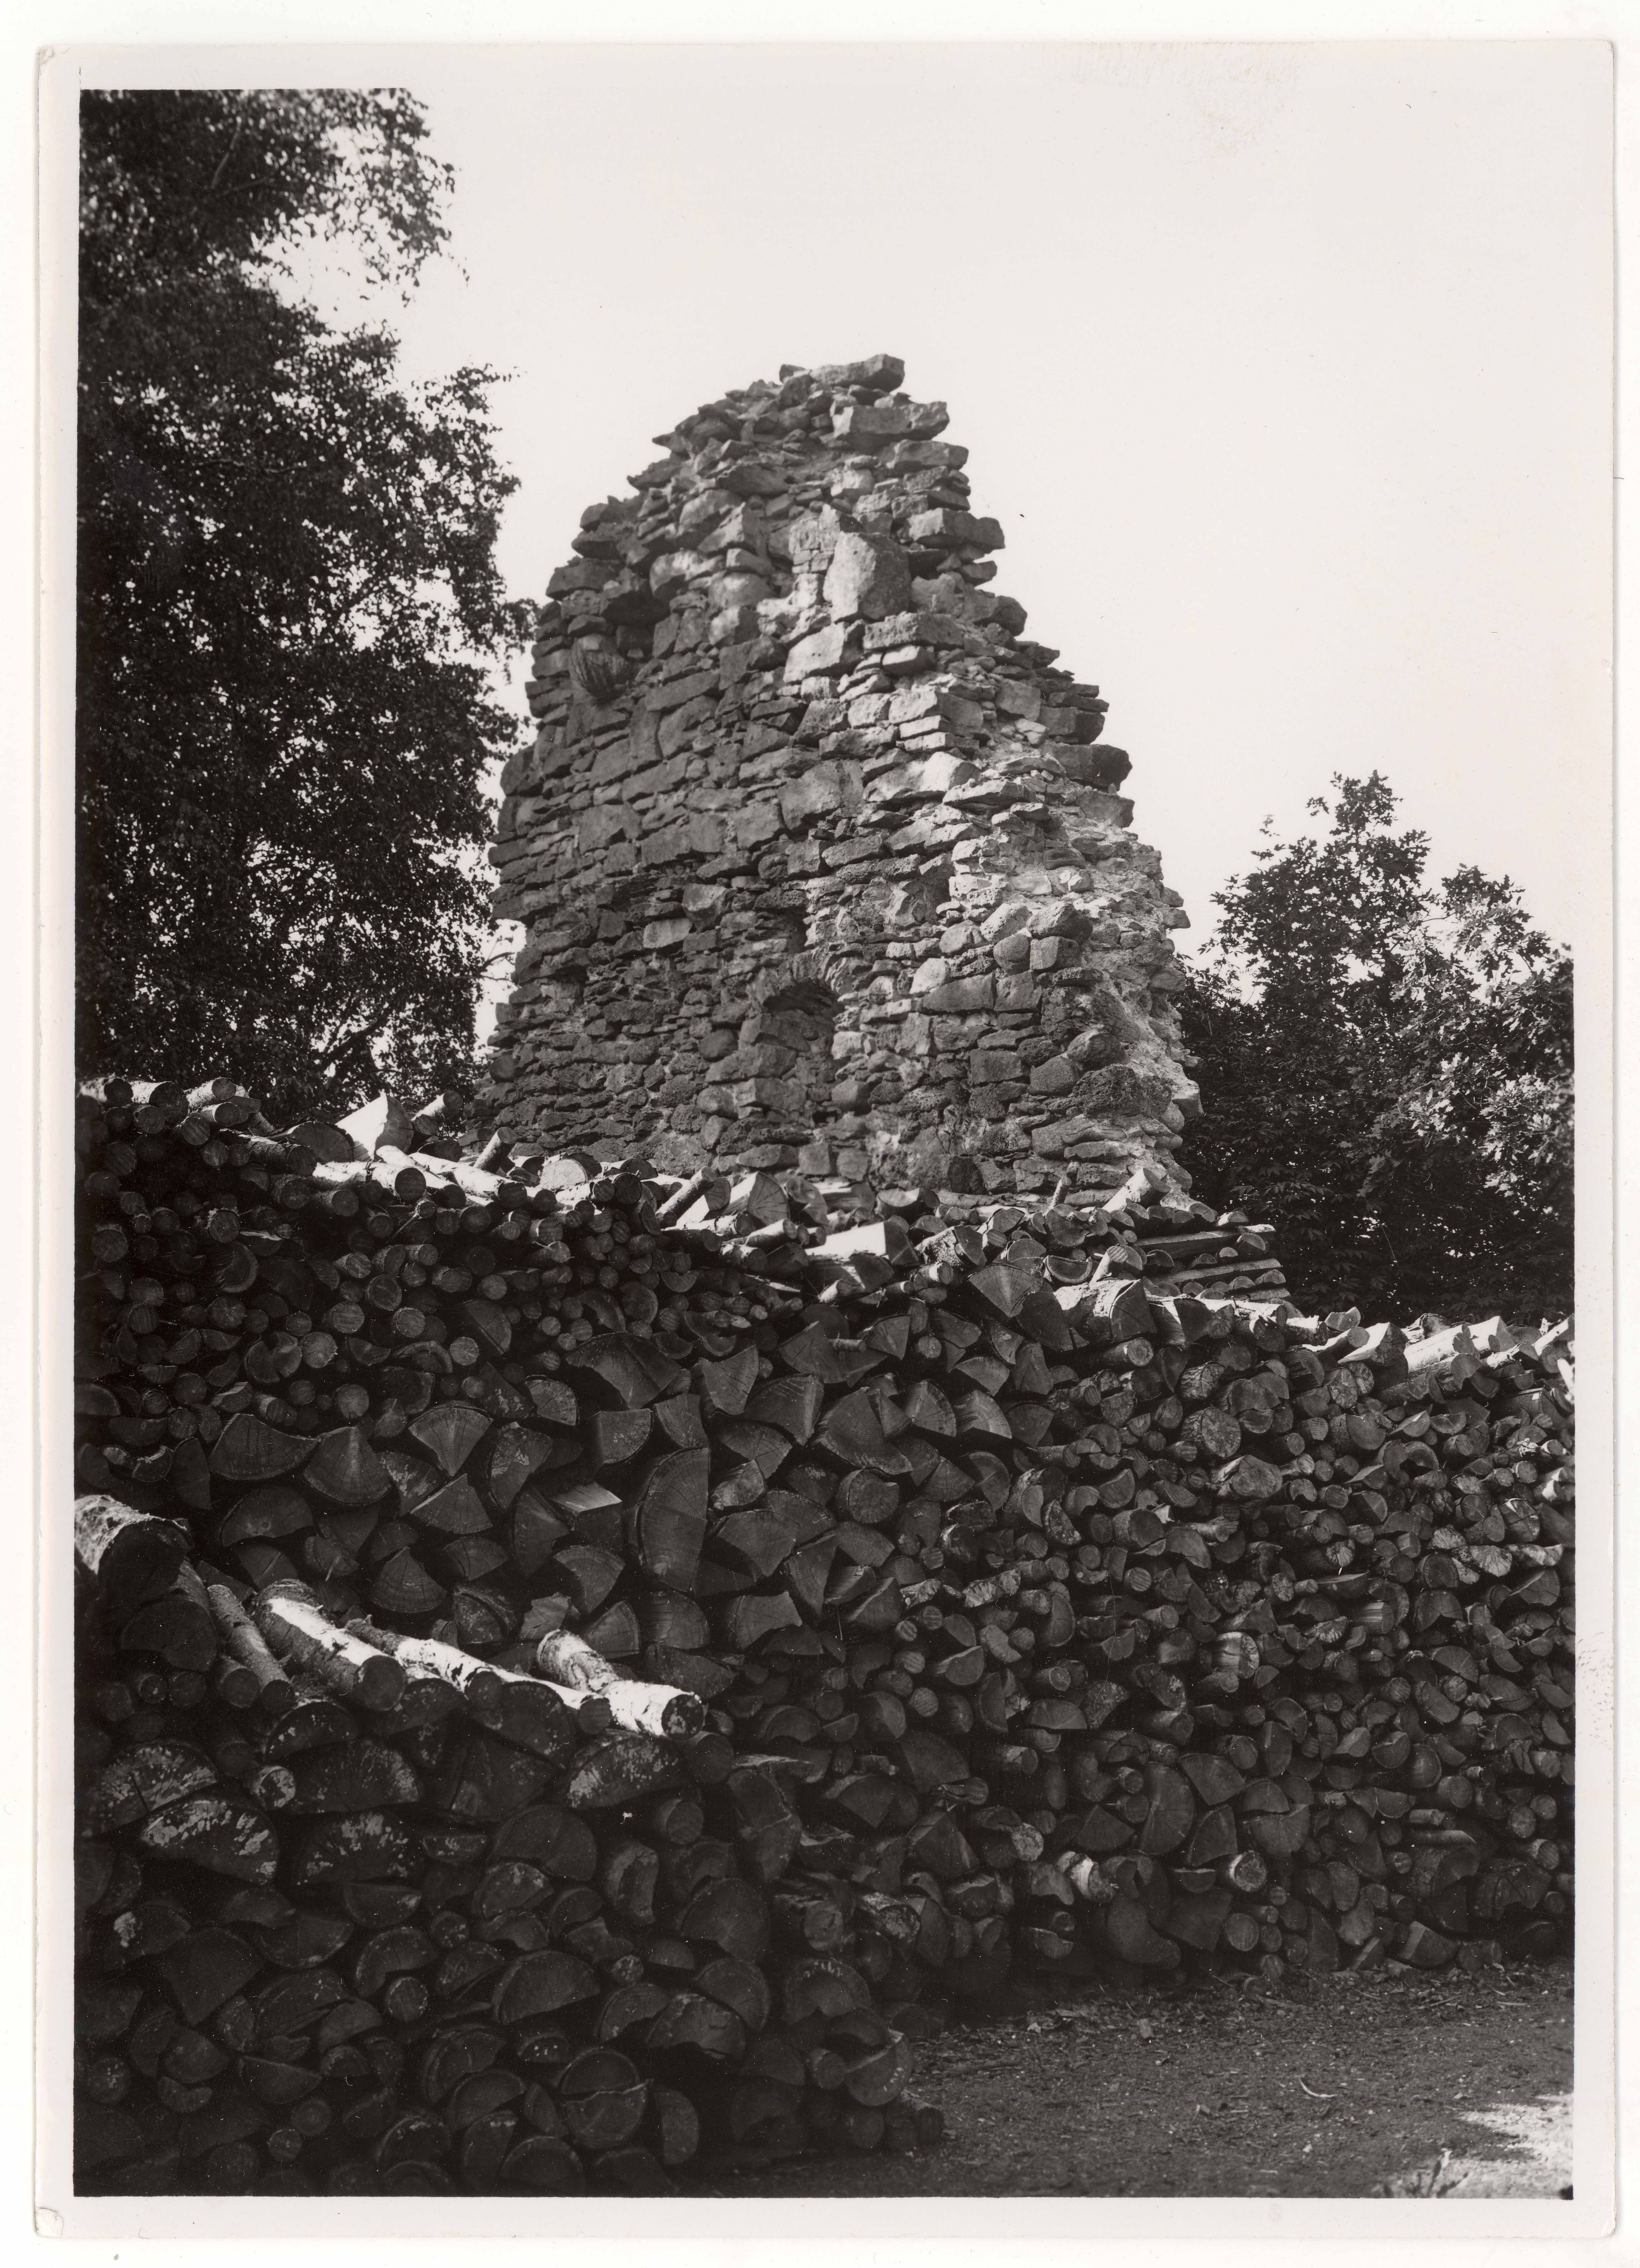 The ruins of the Porkun castle. Wall